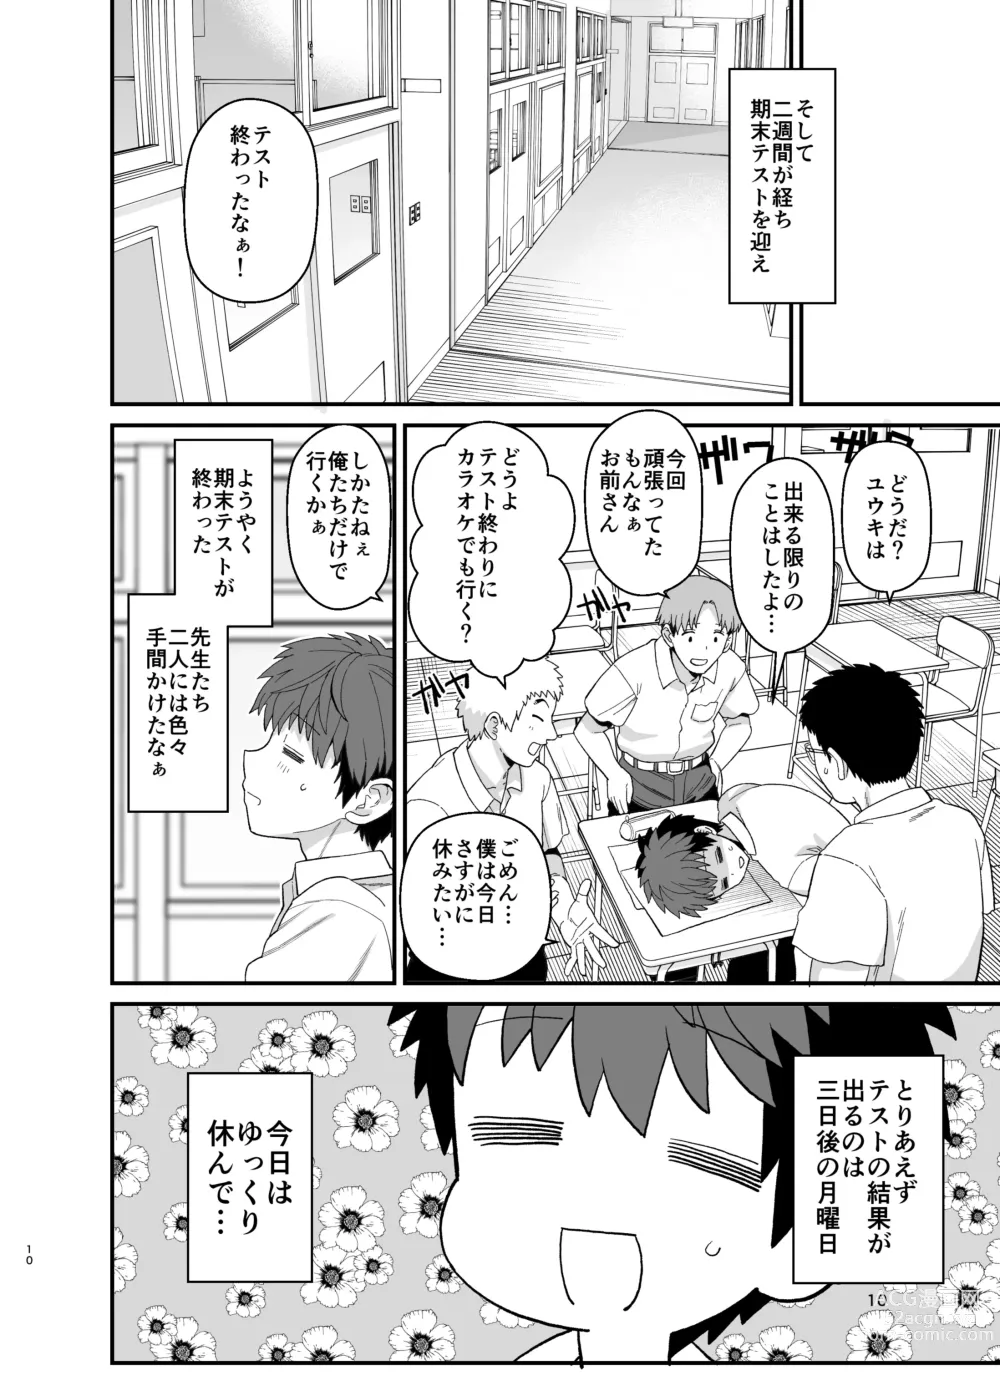 Page 11 of doujinshi Sentaku Kyouka Nijigenme